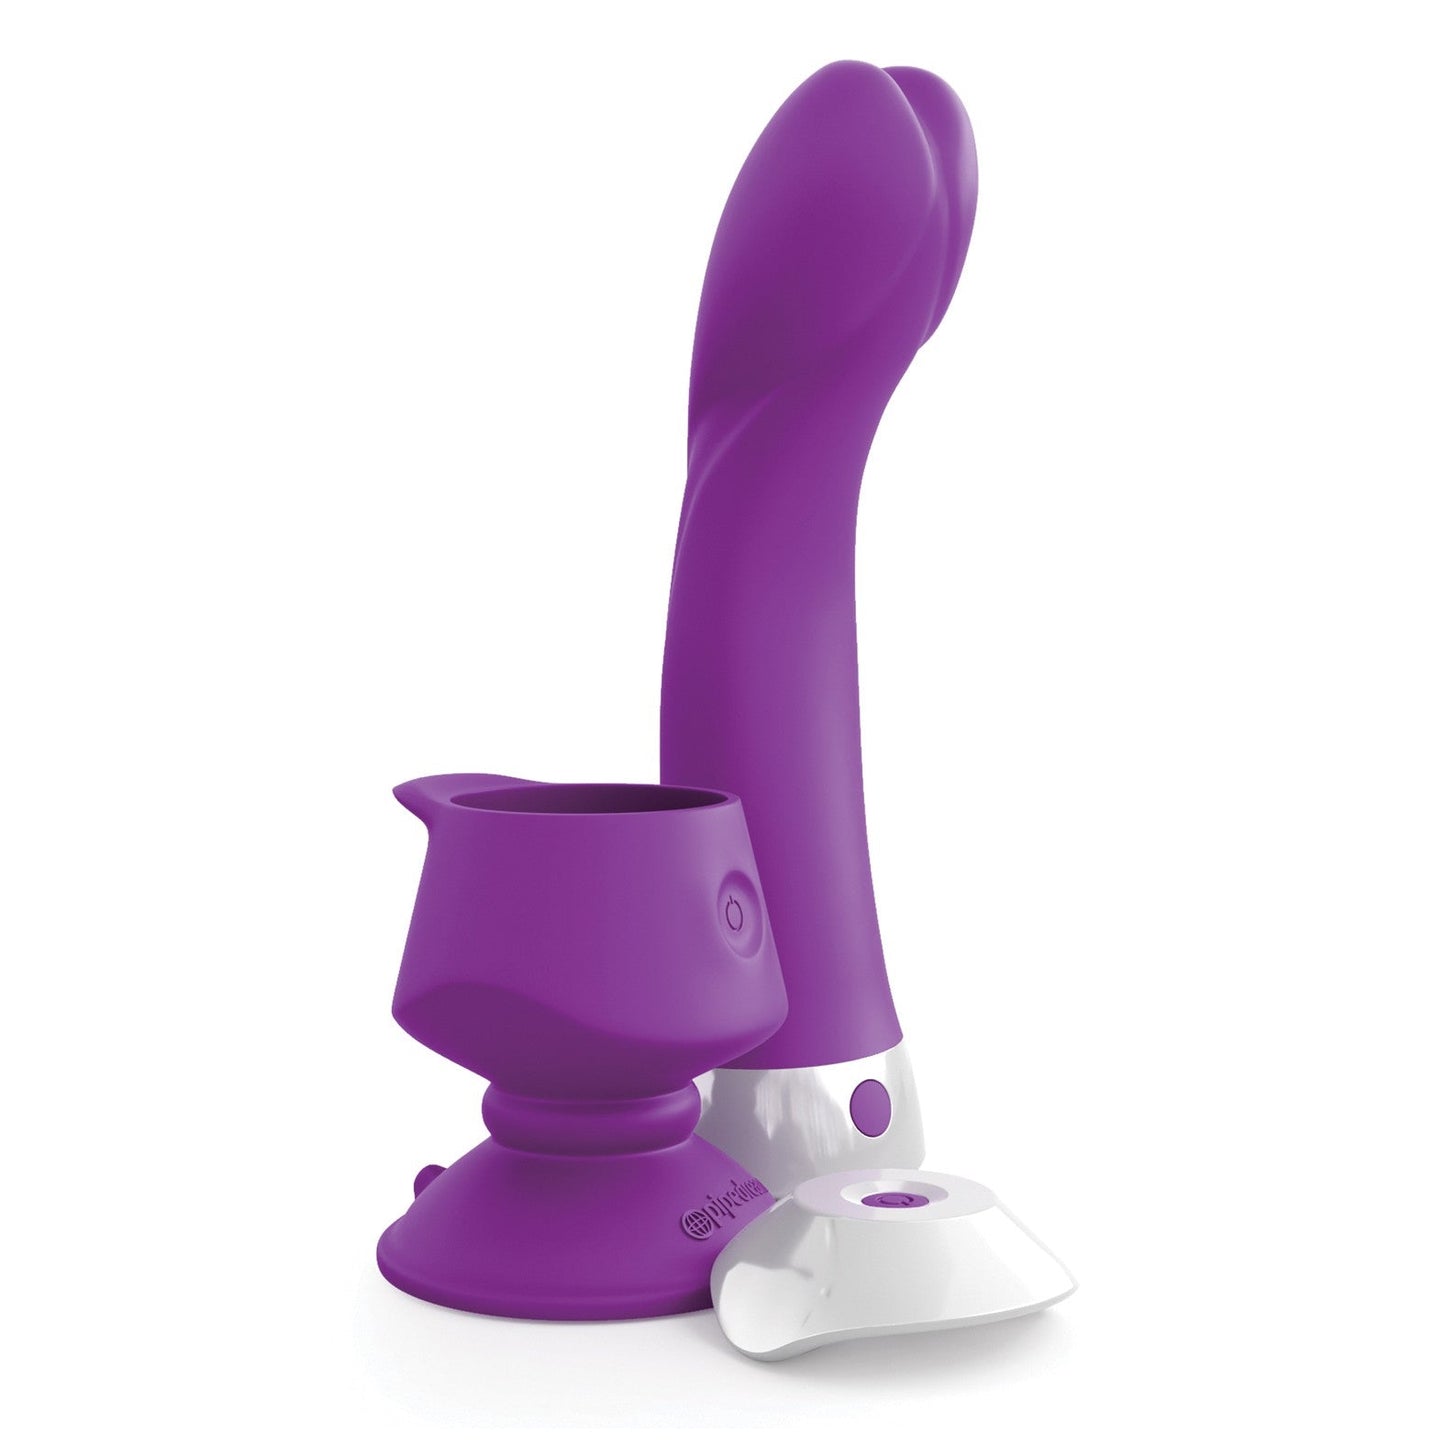 Threesome Wall Banger G Silicone Vibrator  G-bliss O-maker- Purple